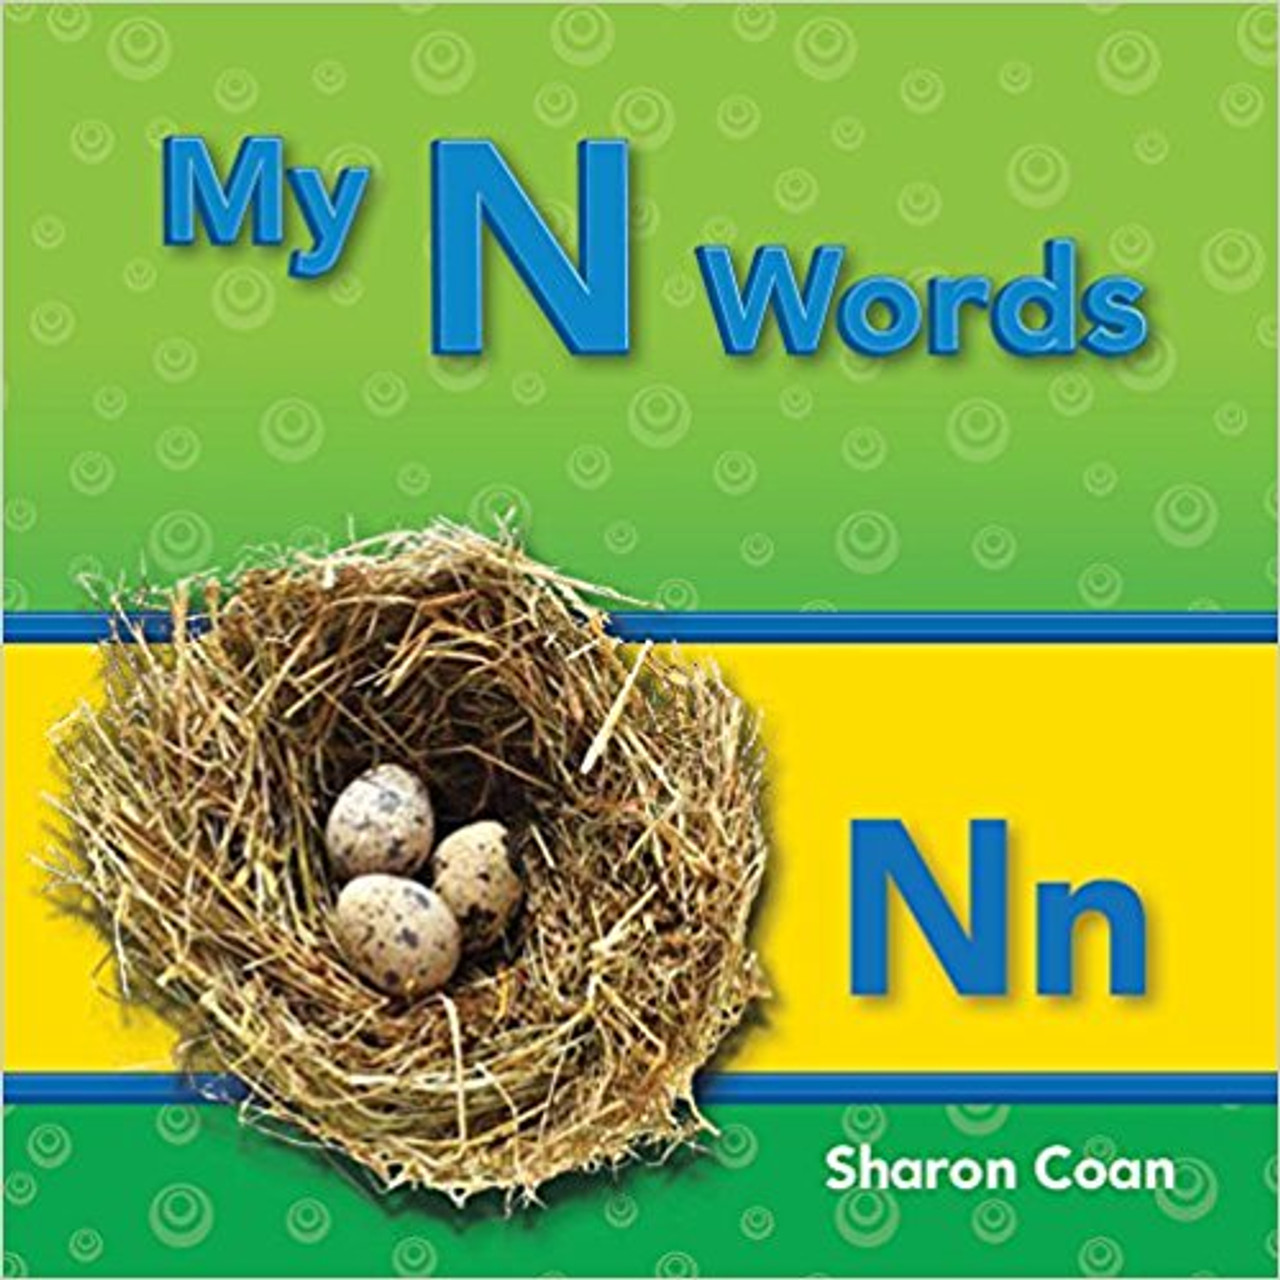 My N Words by Sharon Coan